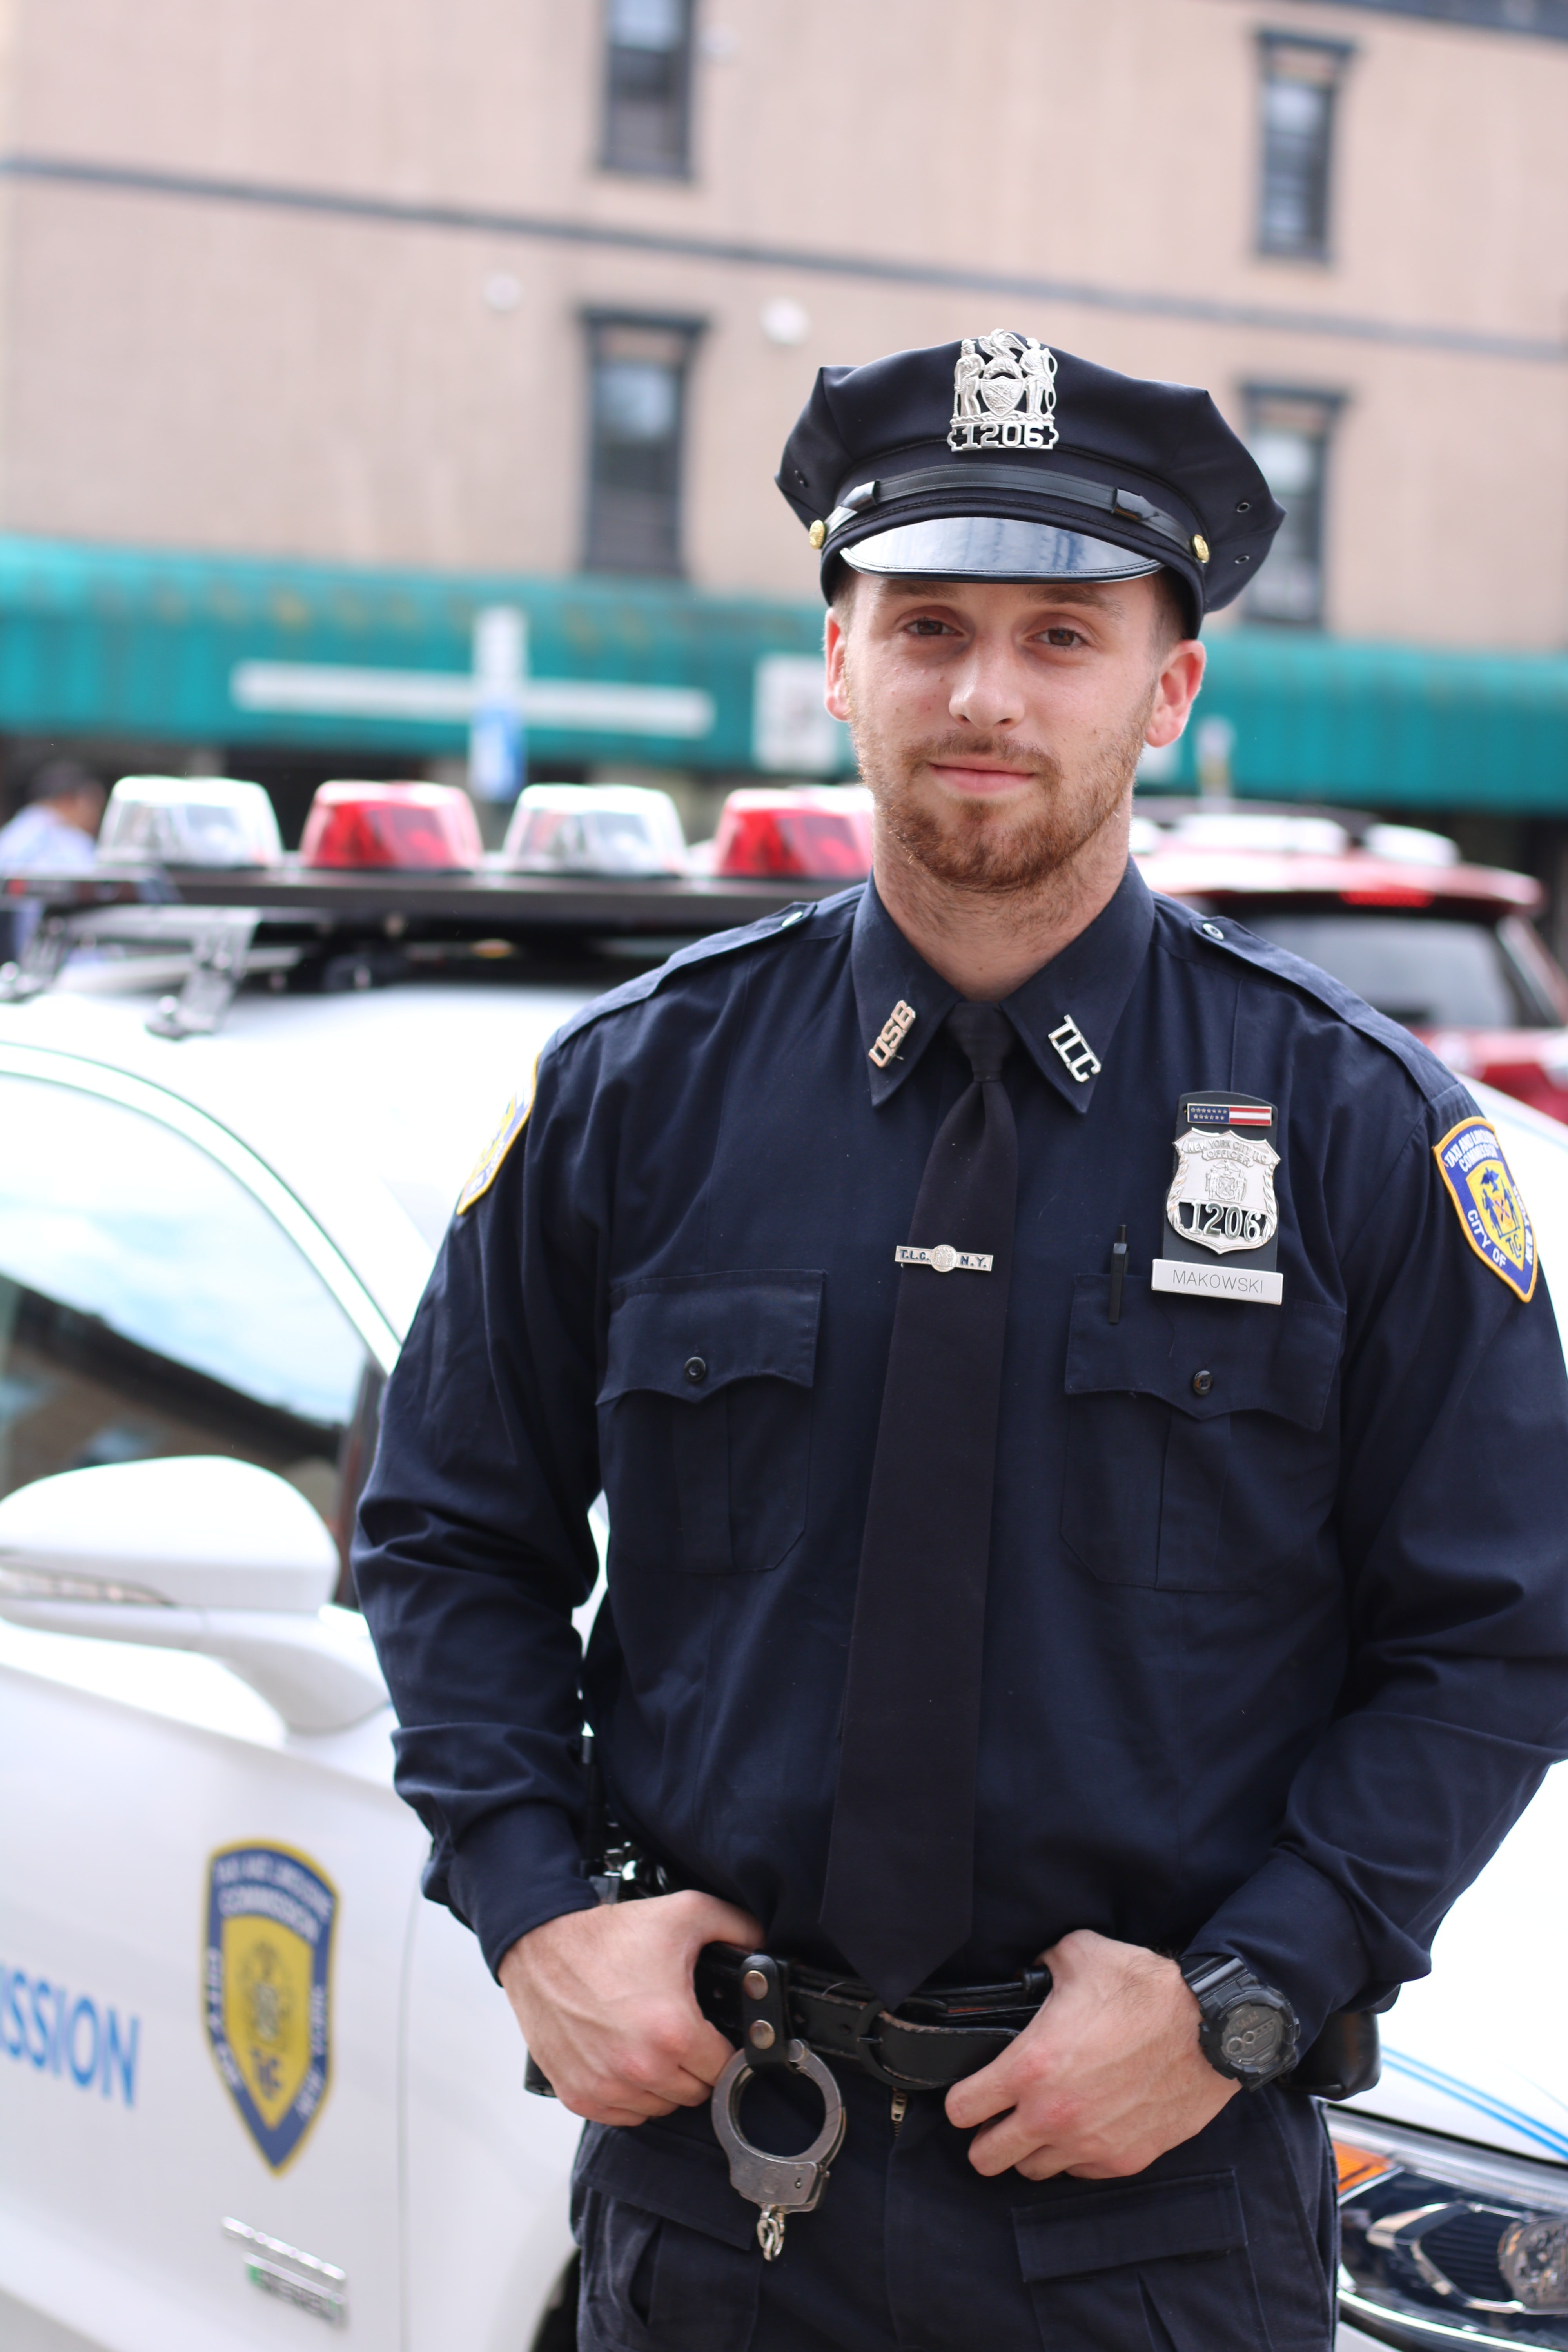 Officer Banks was suspicious of David | Photo: Unsplash